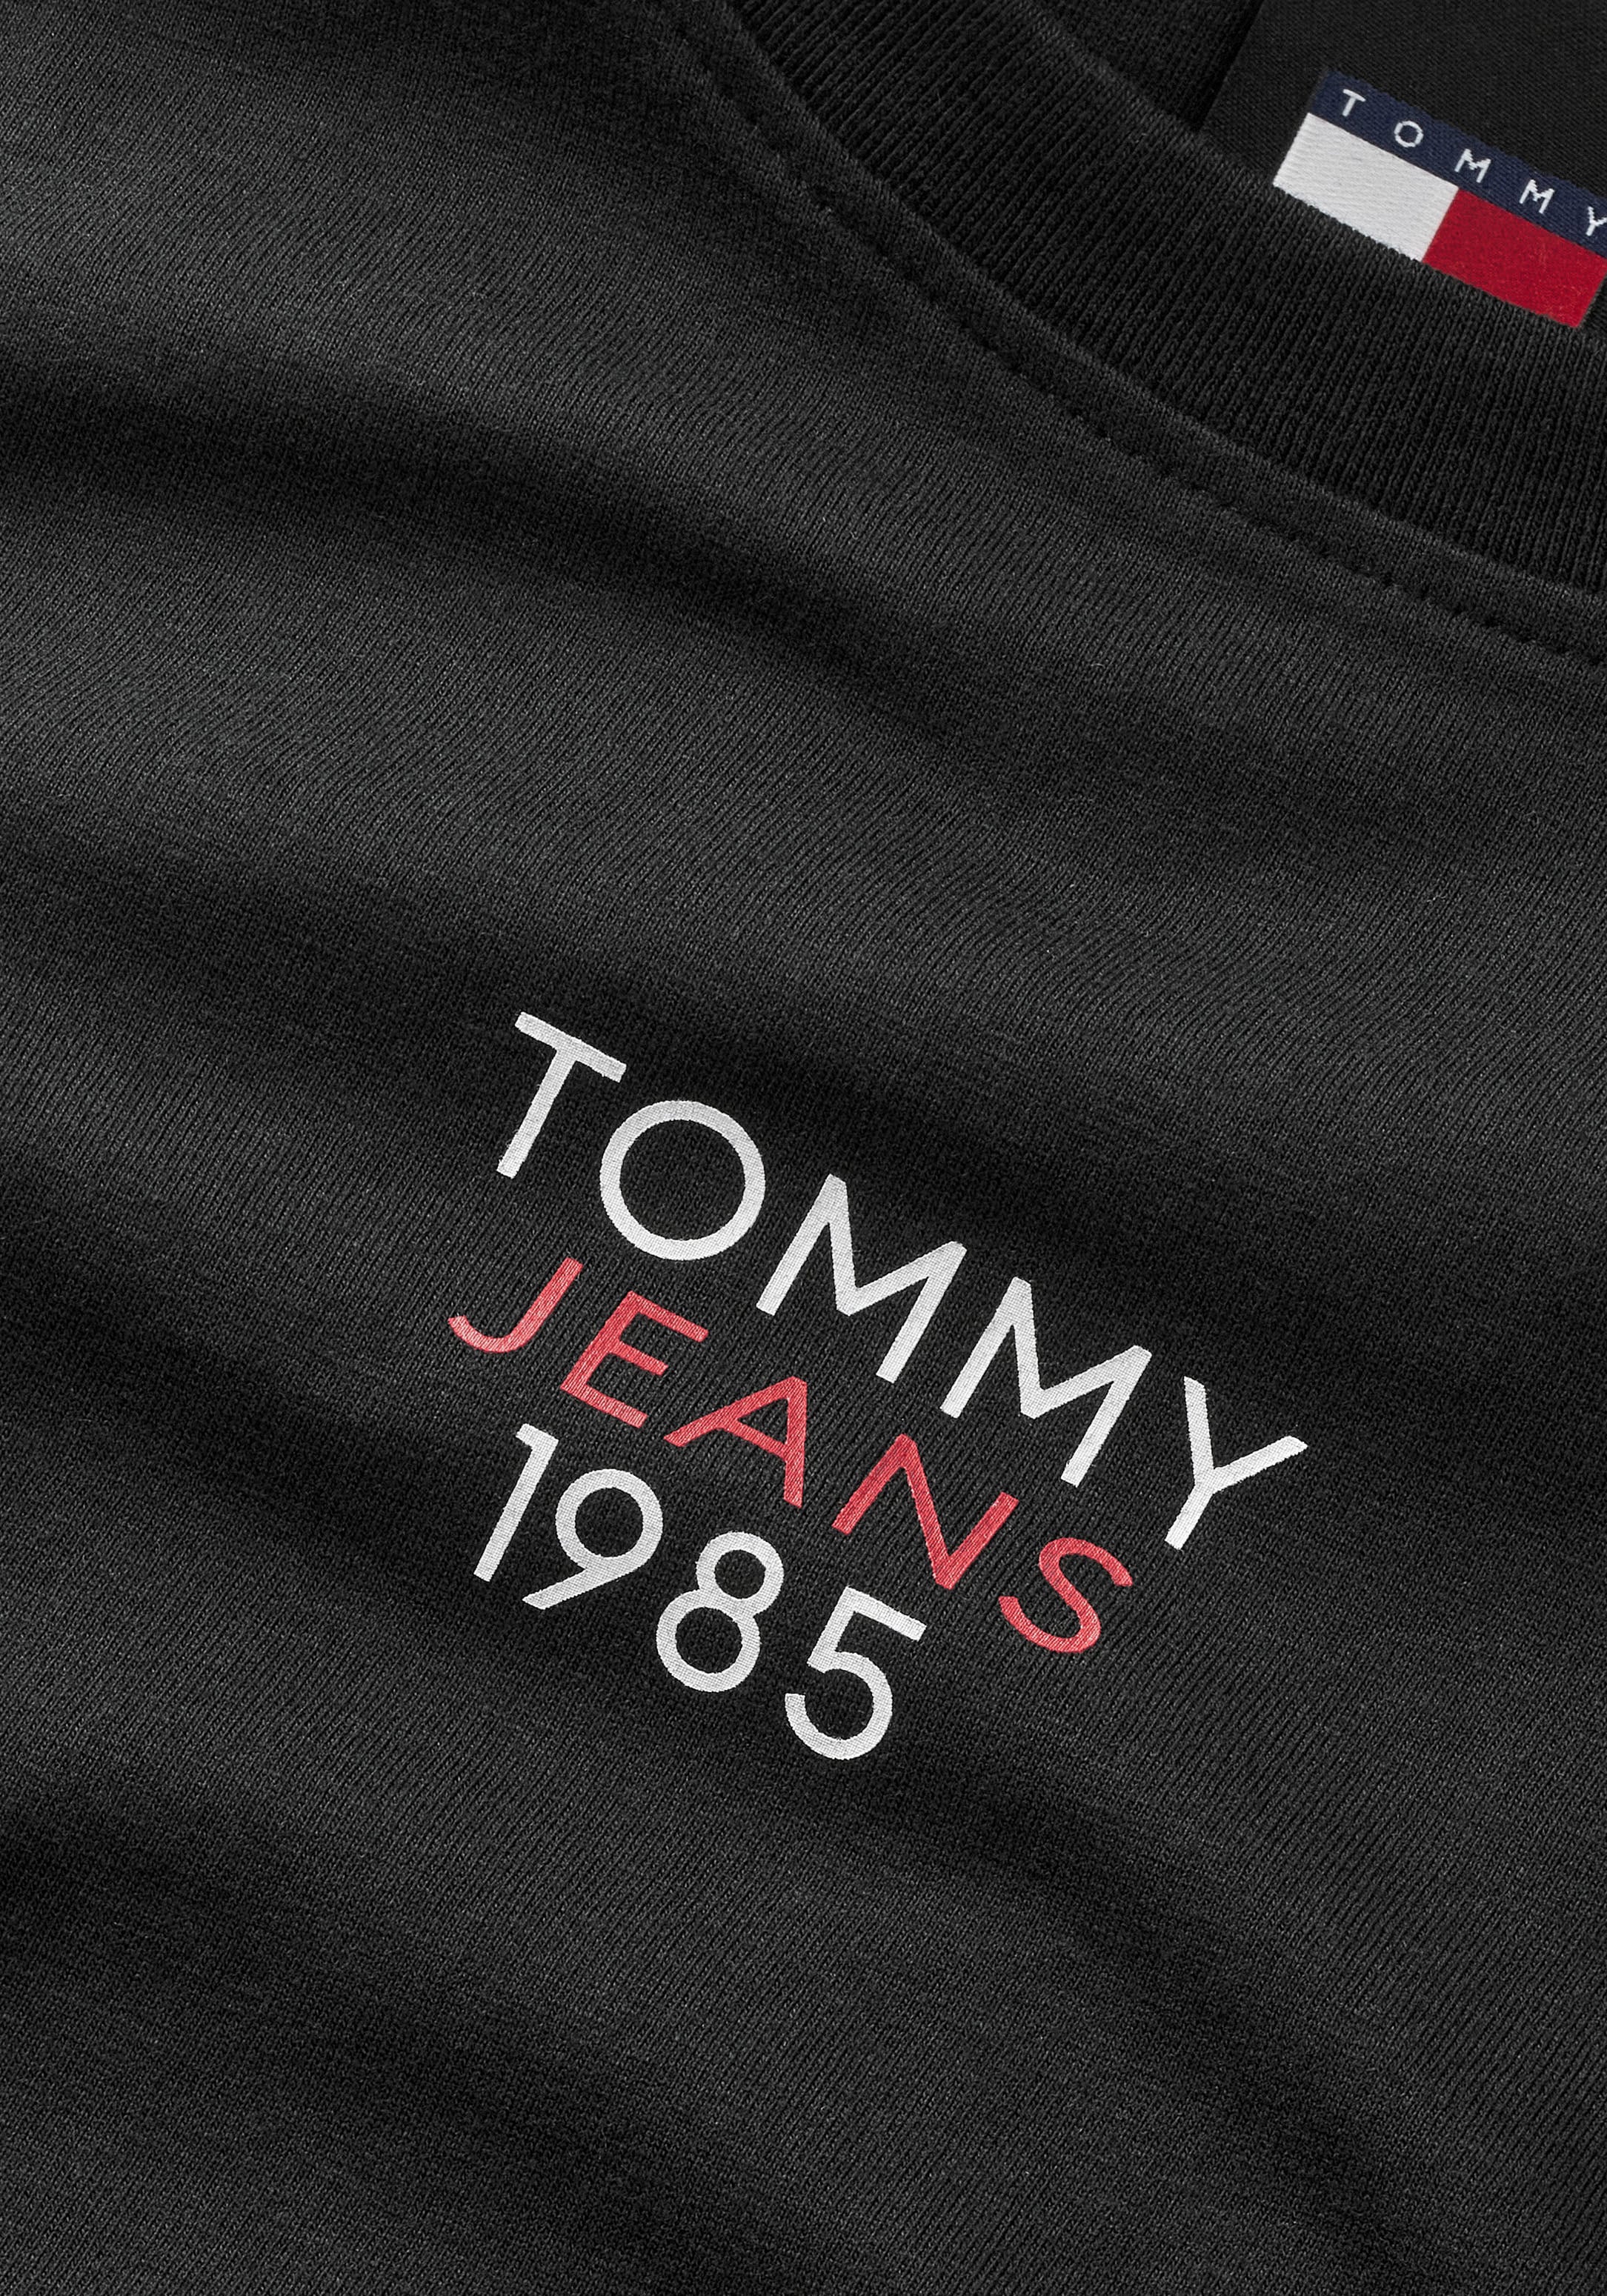 Tommy Jeans Langarmshirt »Slim Fit Essential Logo Longsleeve Shirt«, mit Logoschriftzug